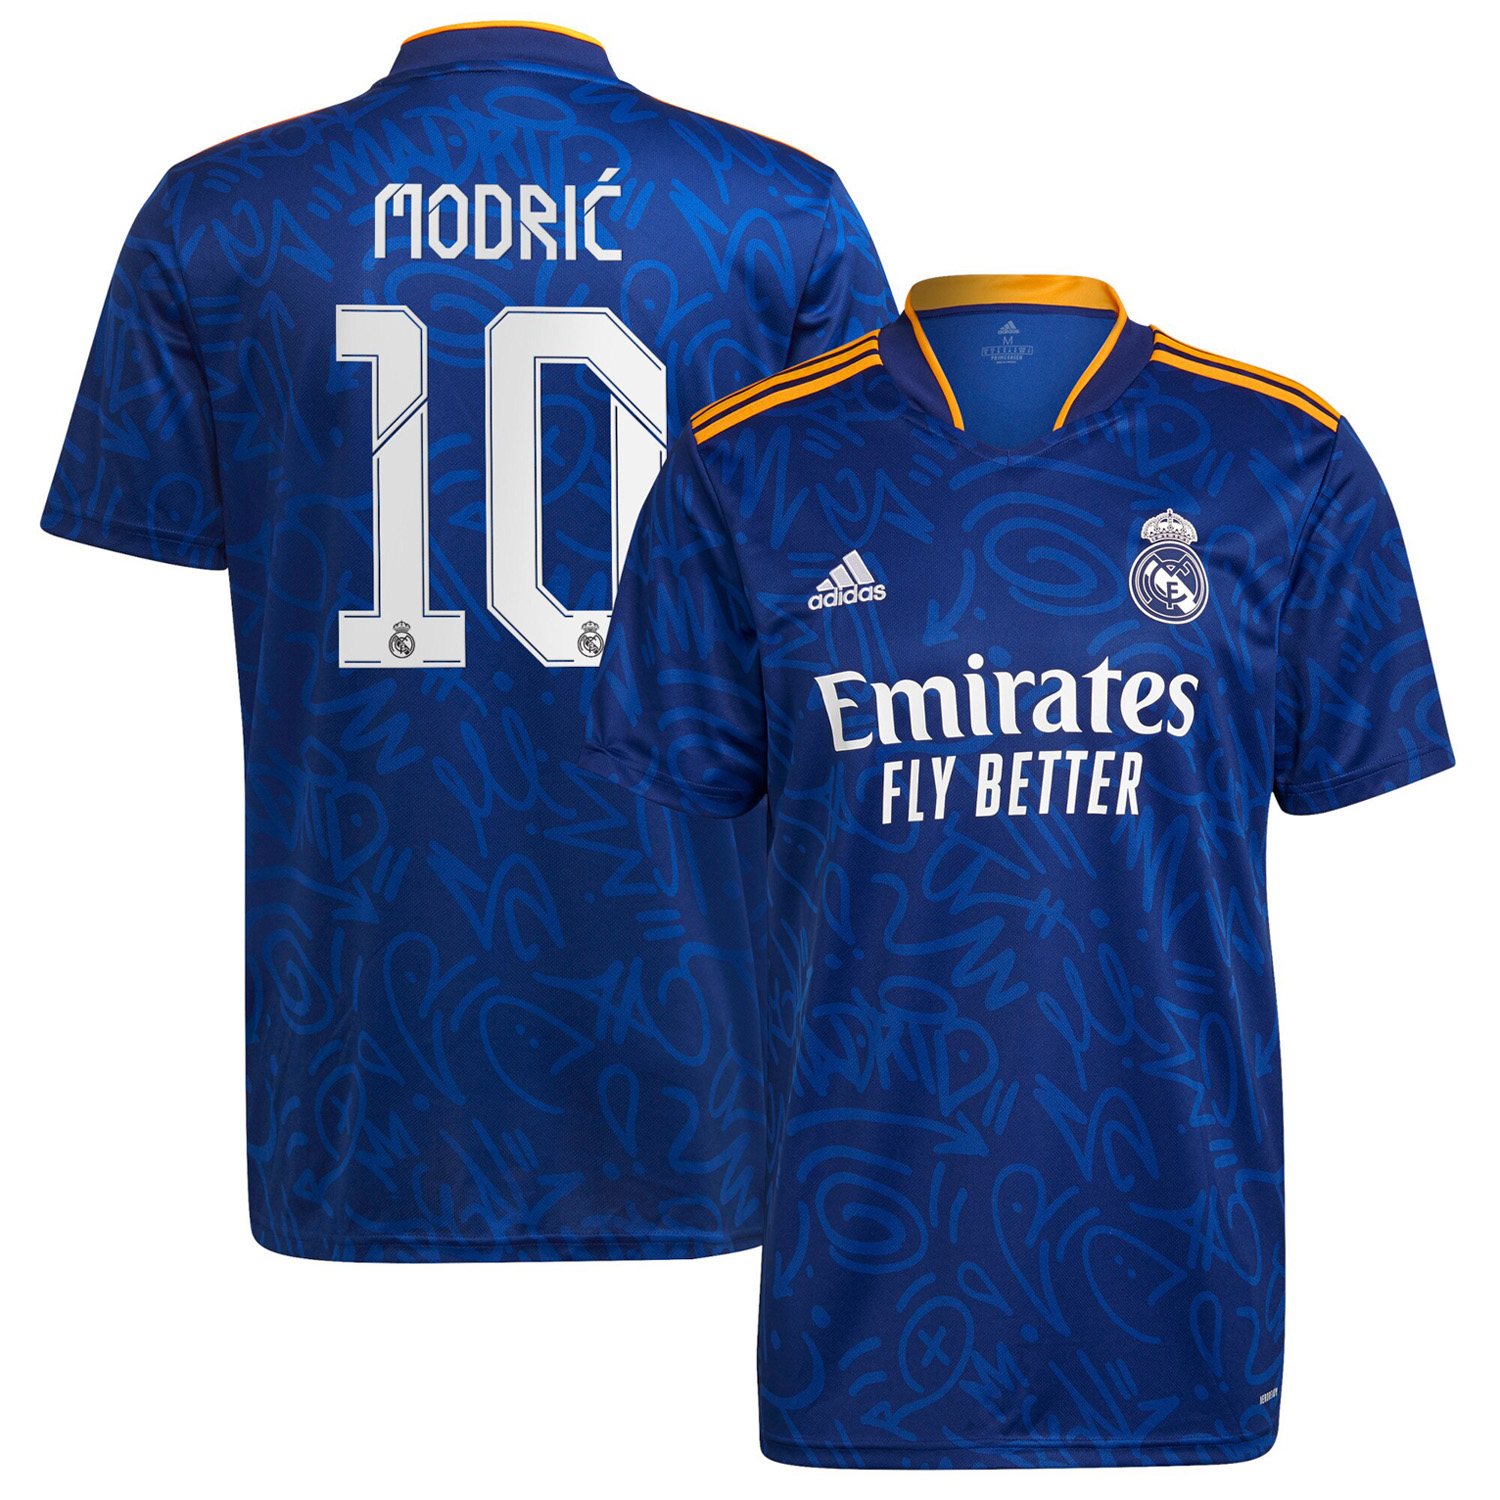 Modric #10 Madrid Home Men's Soccer Jersey 2021/22 